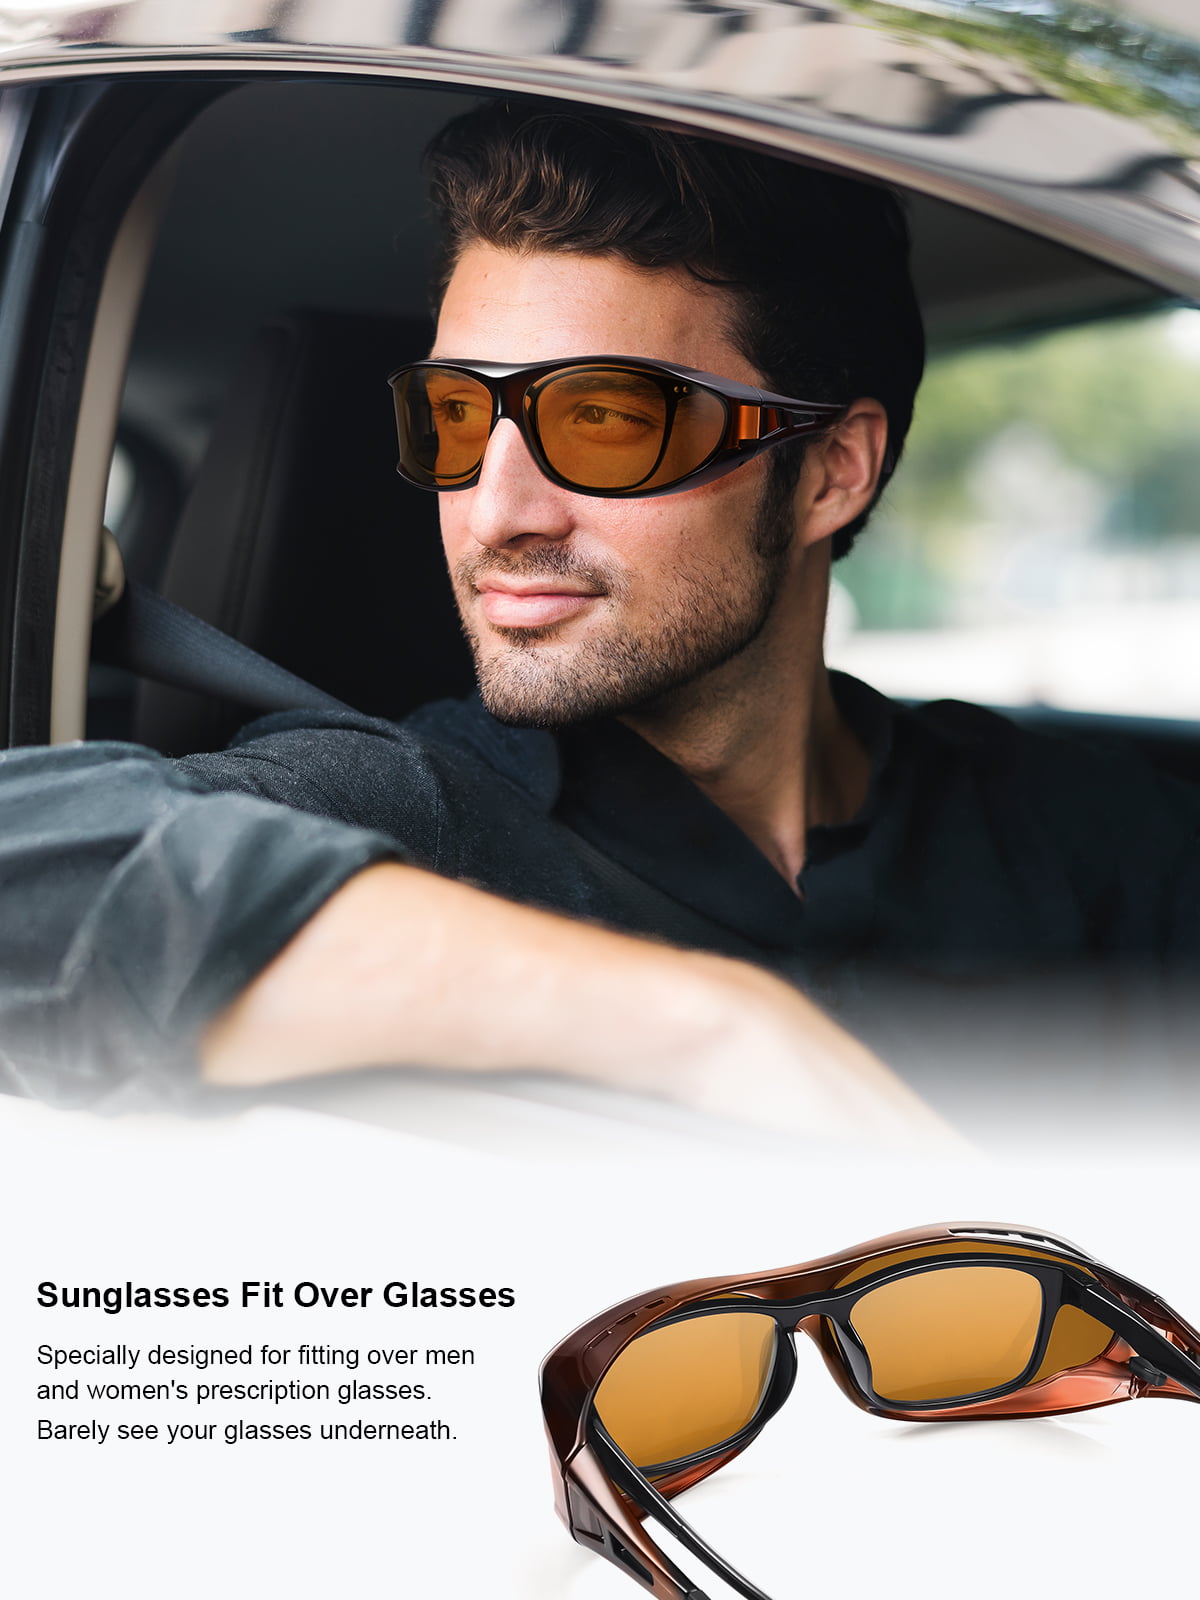 FitoverUSA.com - World's best fitover sunglasses